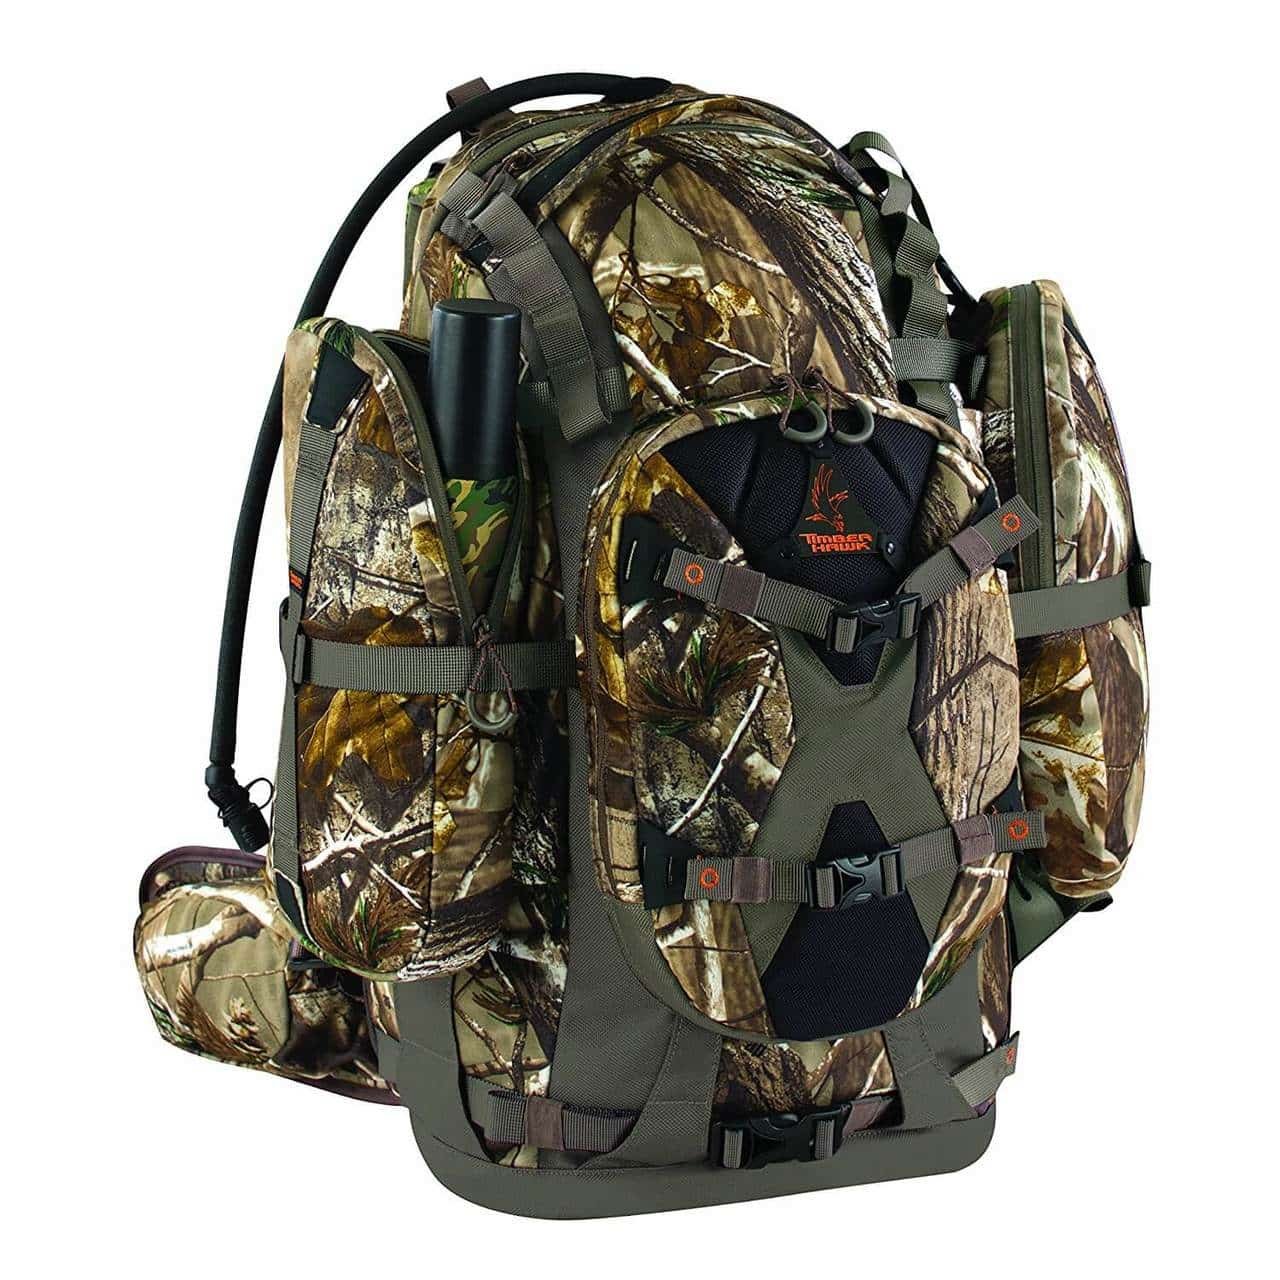 Best Bow Hunting Backpack #2 - Timber Hawk Killshot